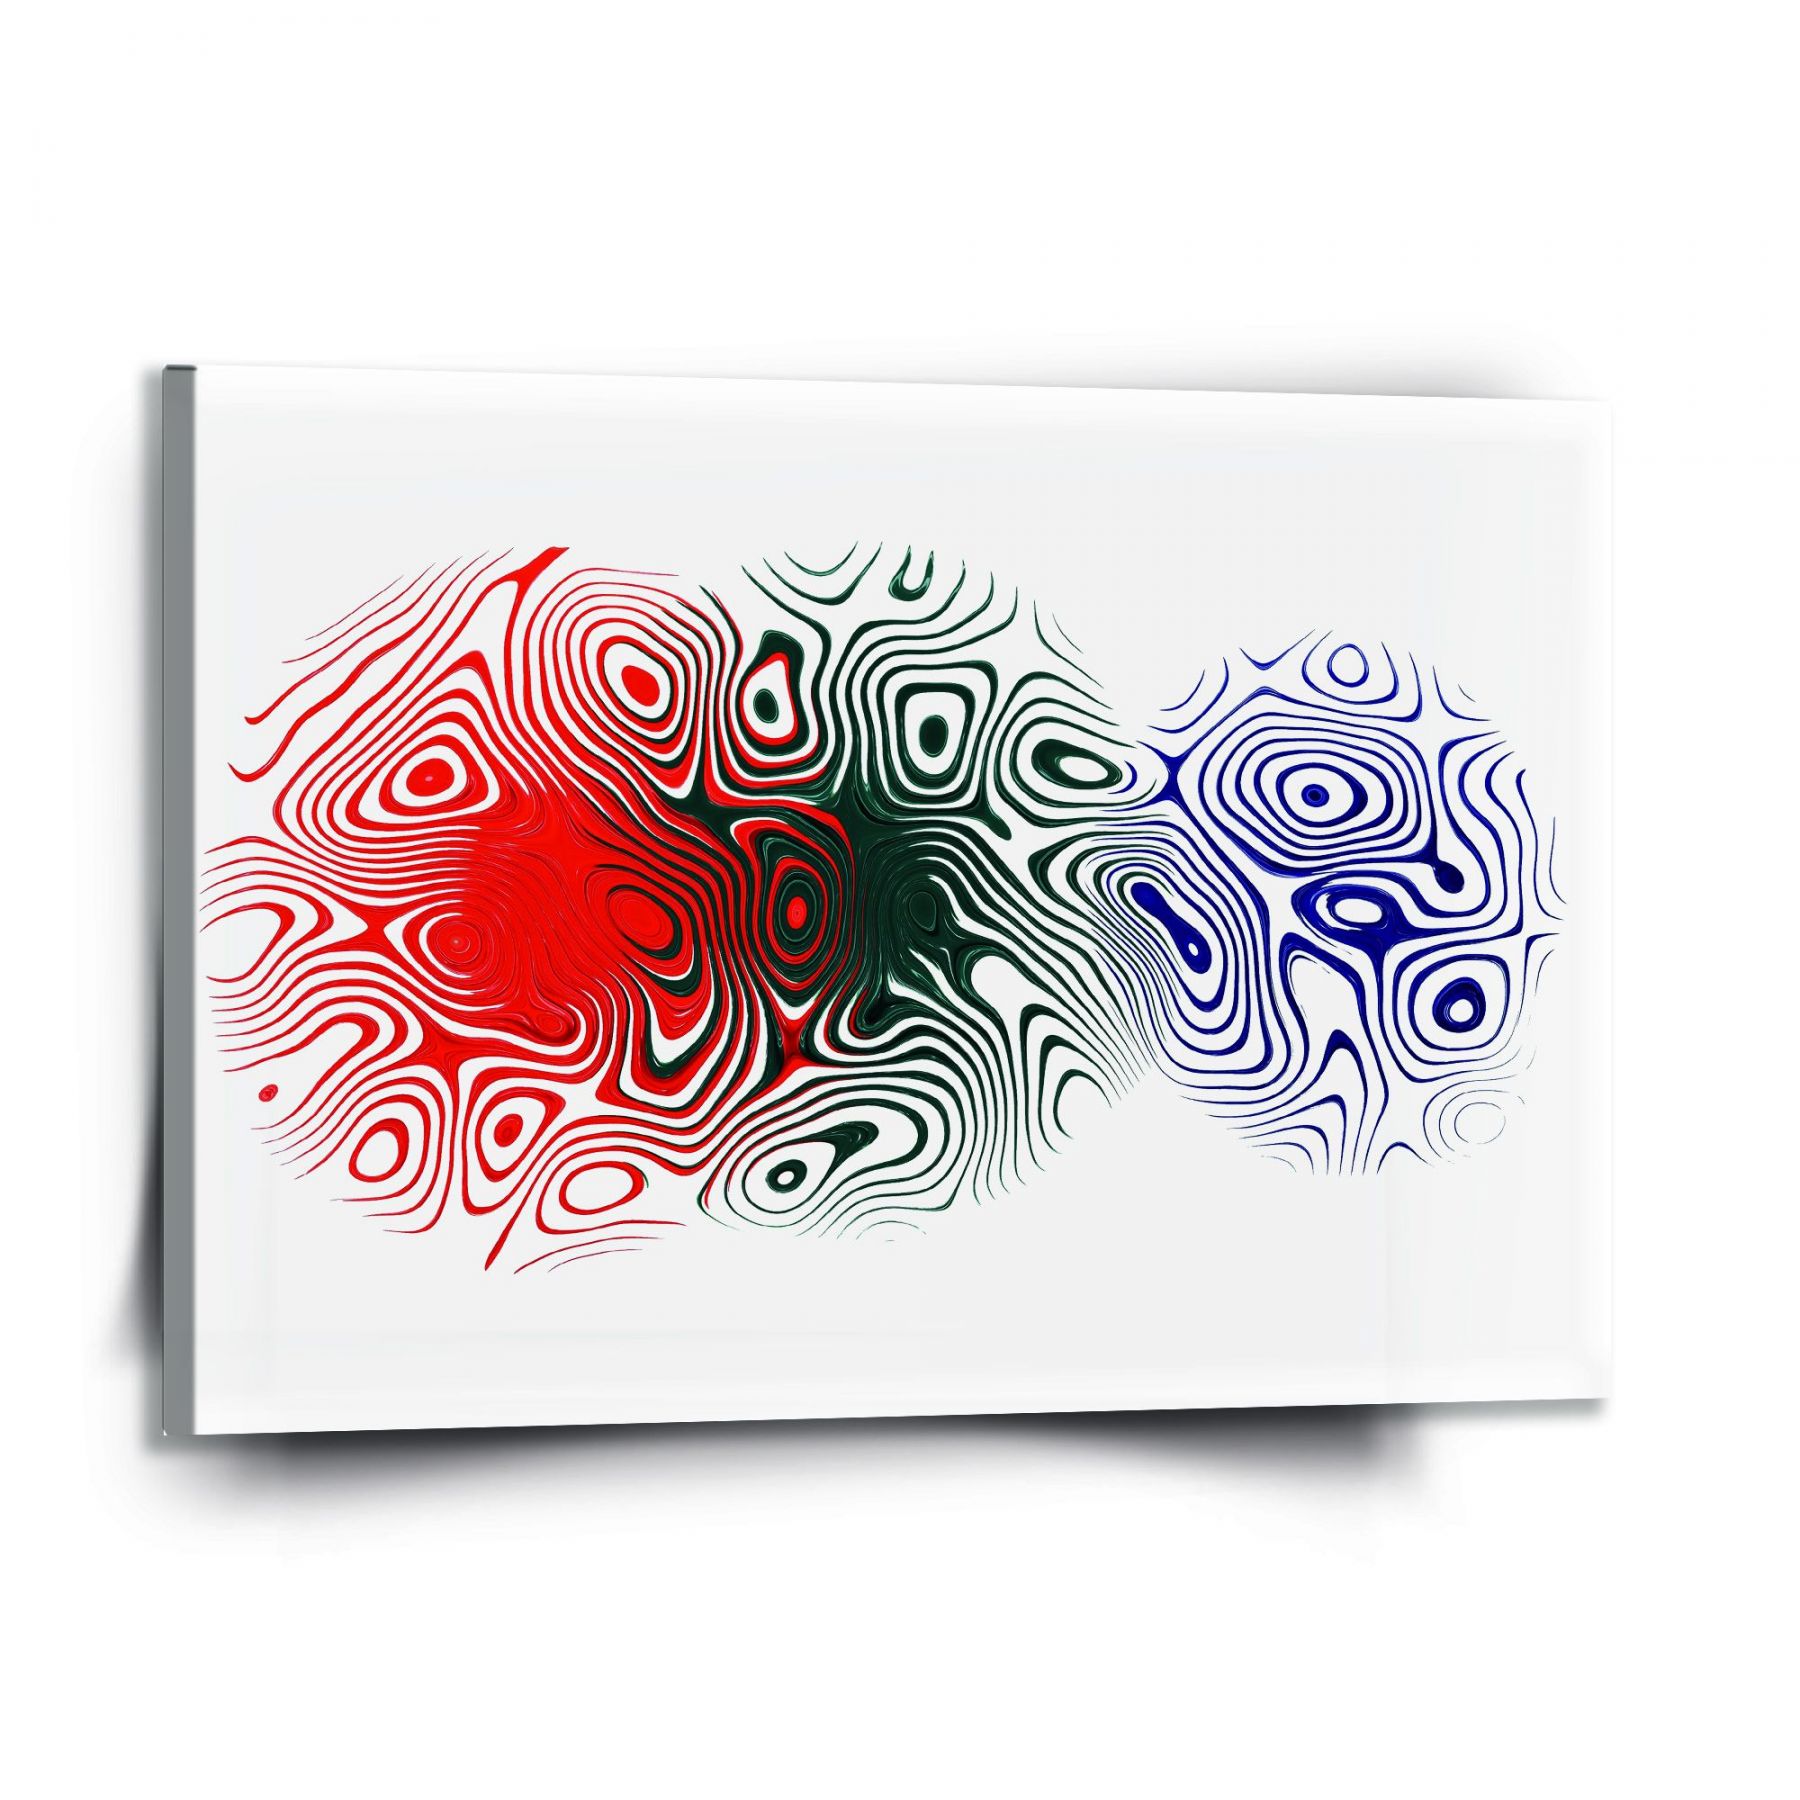 Obraz SABLIO - Dvoubarevná abstrakce 150x110 cm - E-shop Sablo s.r.o.